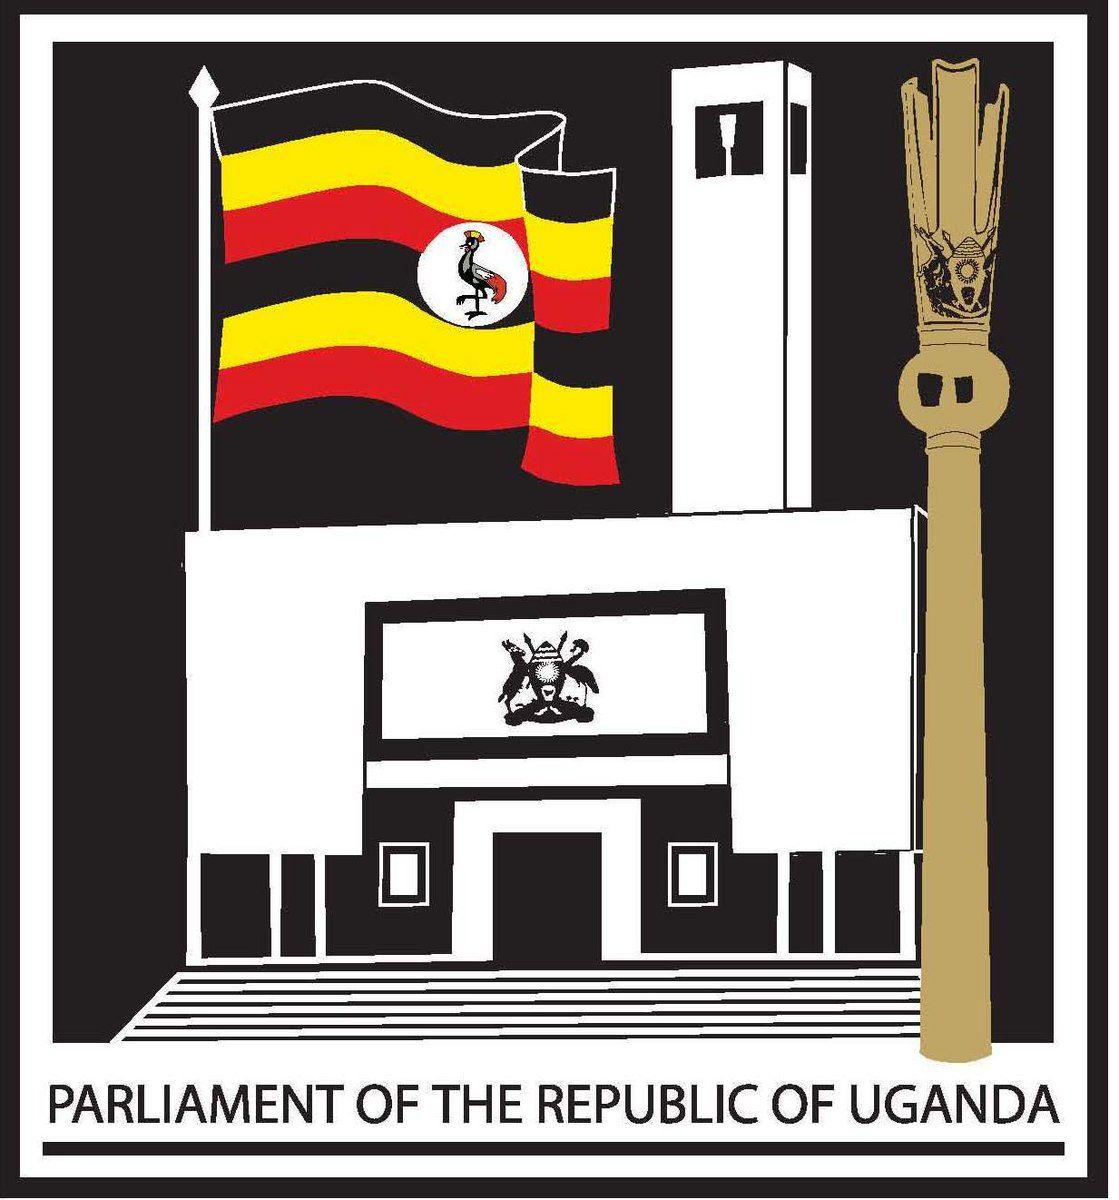 Parliament Logo - Parliament to change logo - Eagle Online